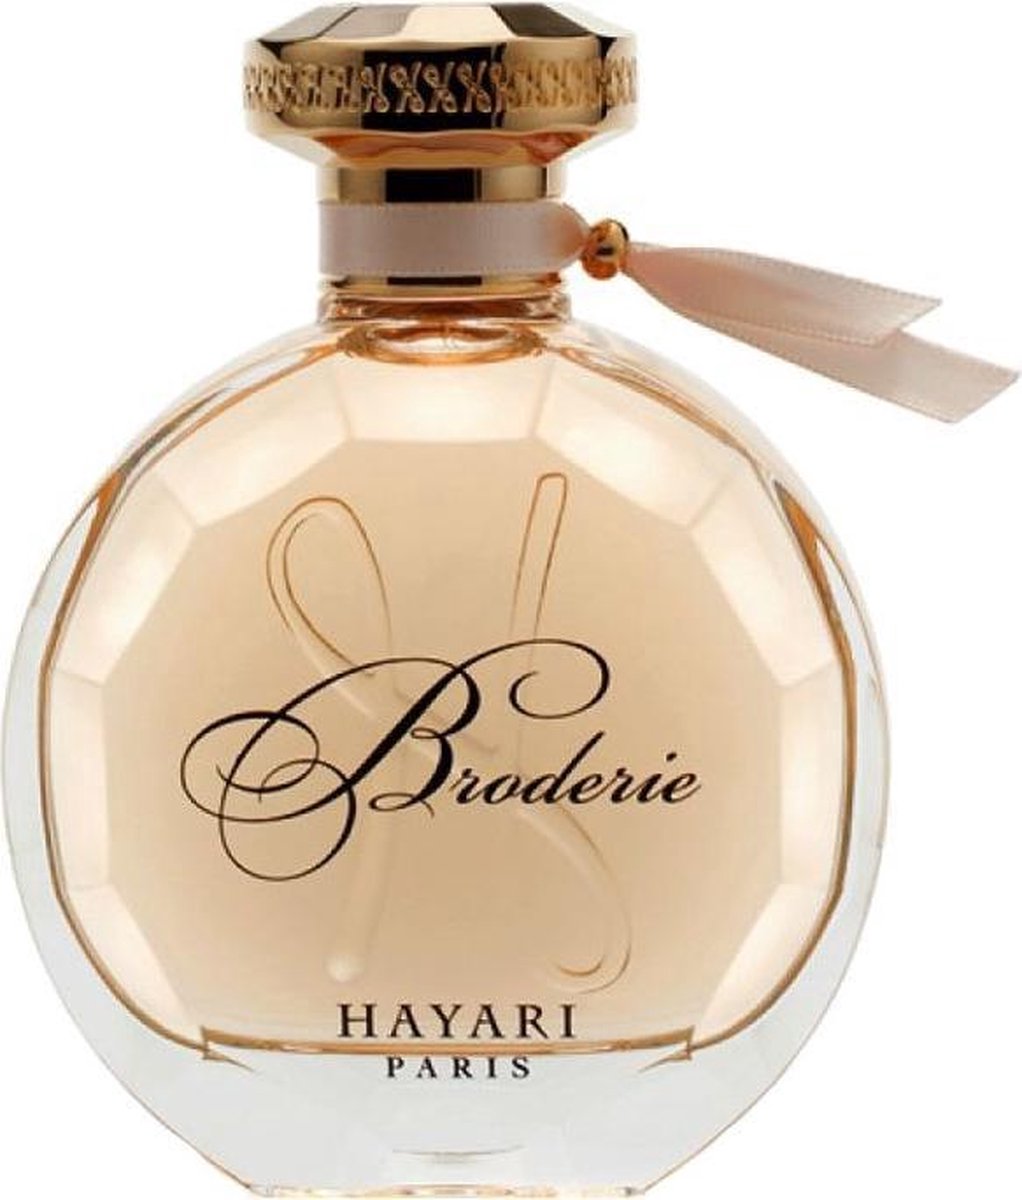 Hayari Broderie Eau de Parfum Spray 100 ml